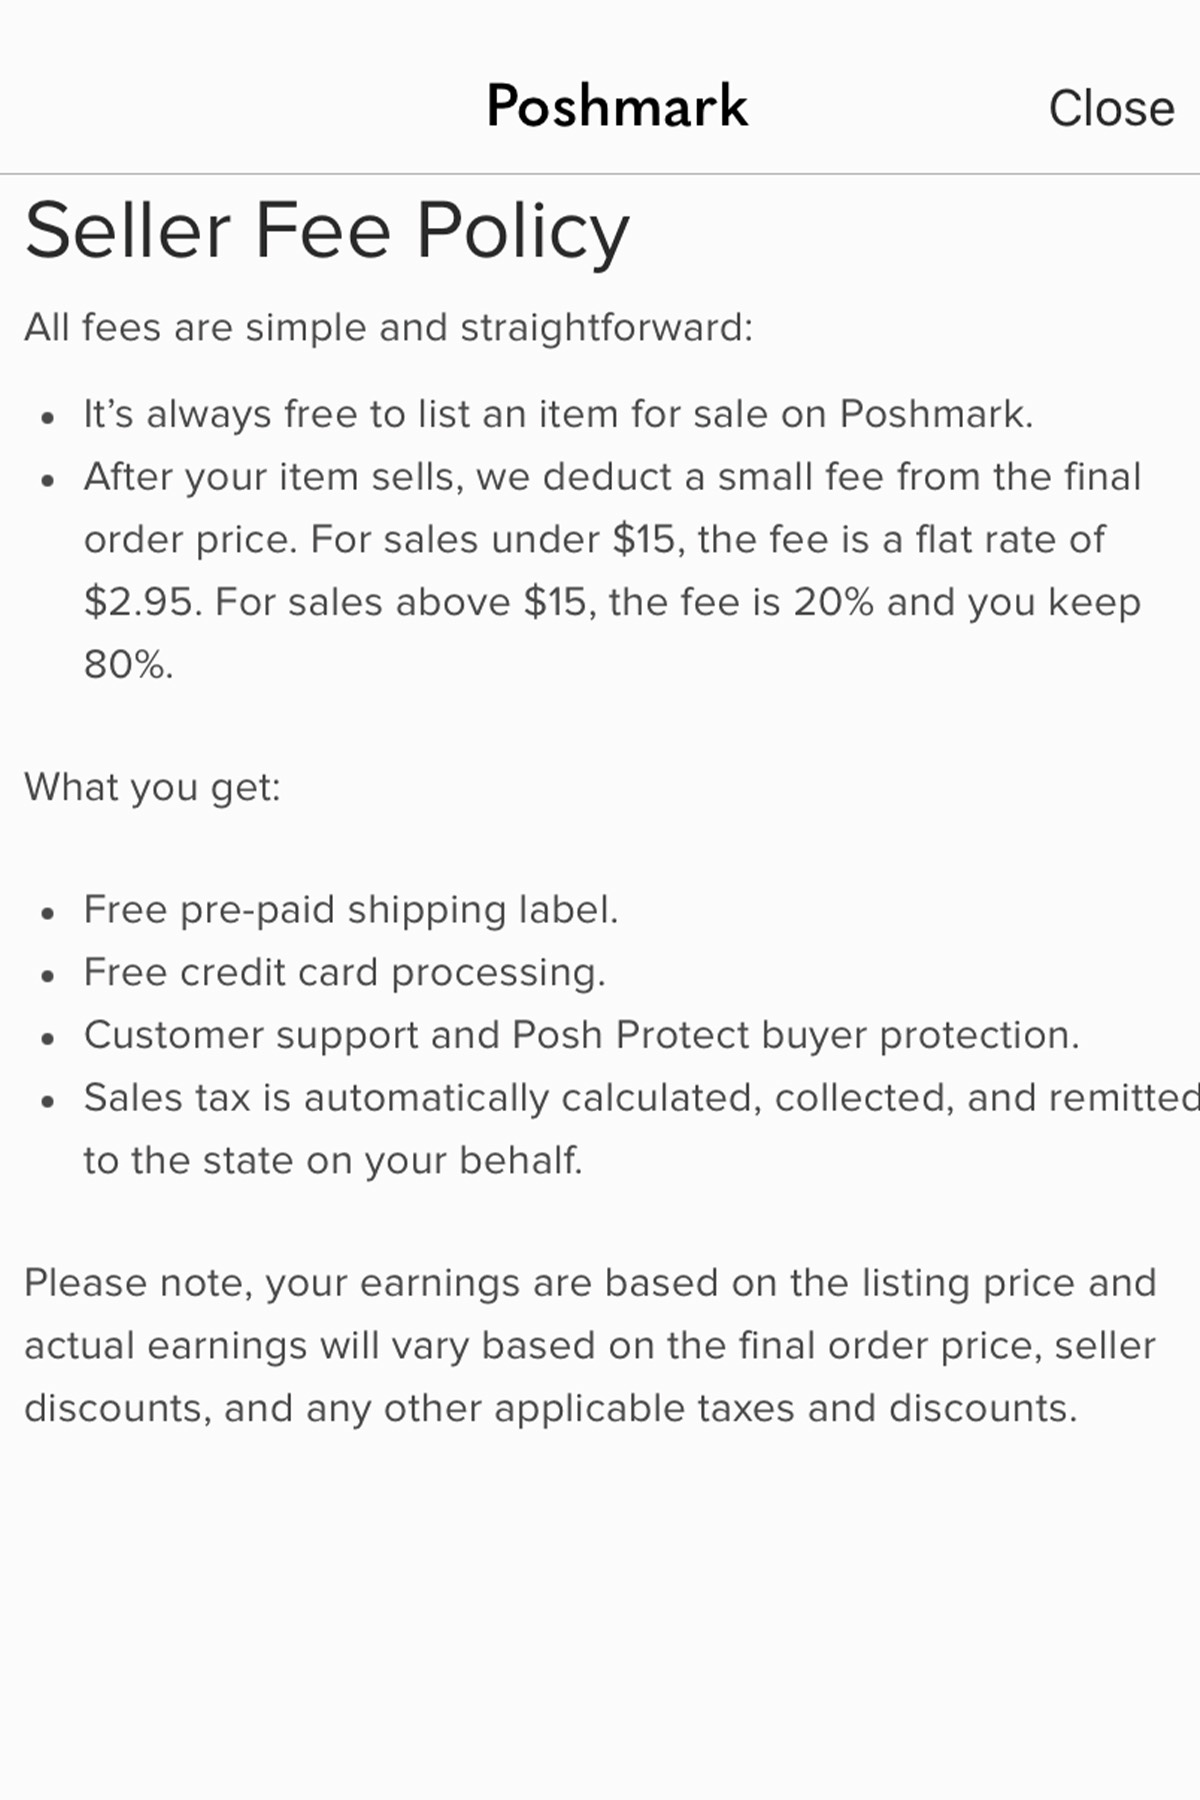 screenshot of the poshmark seller fees policy.